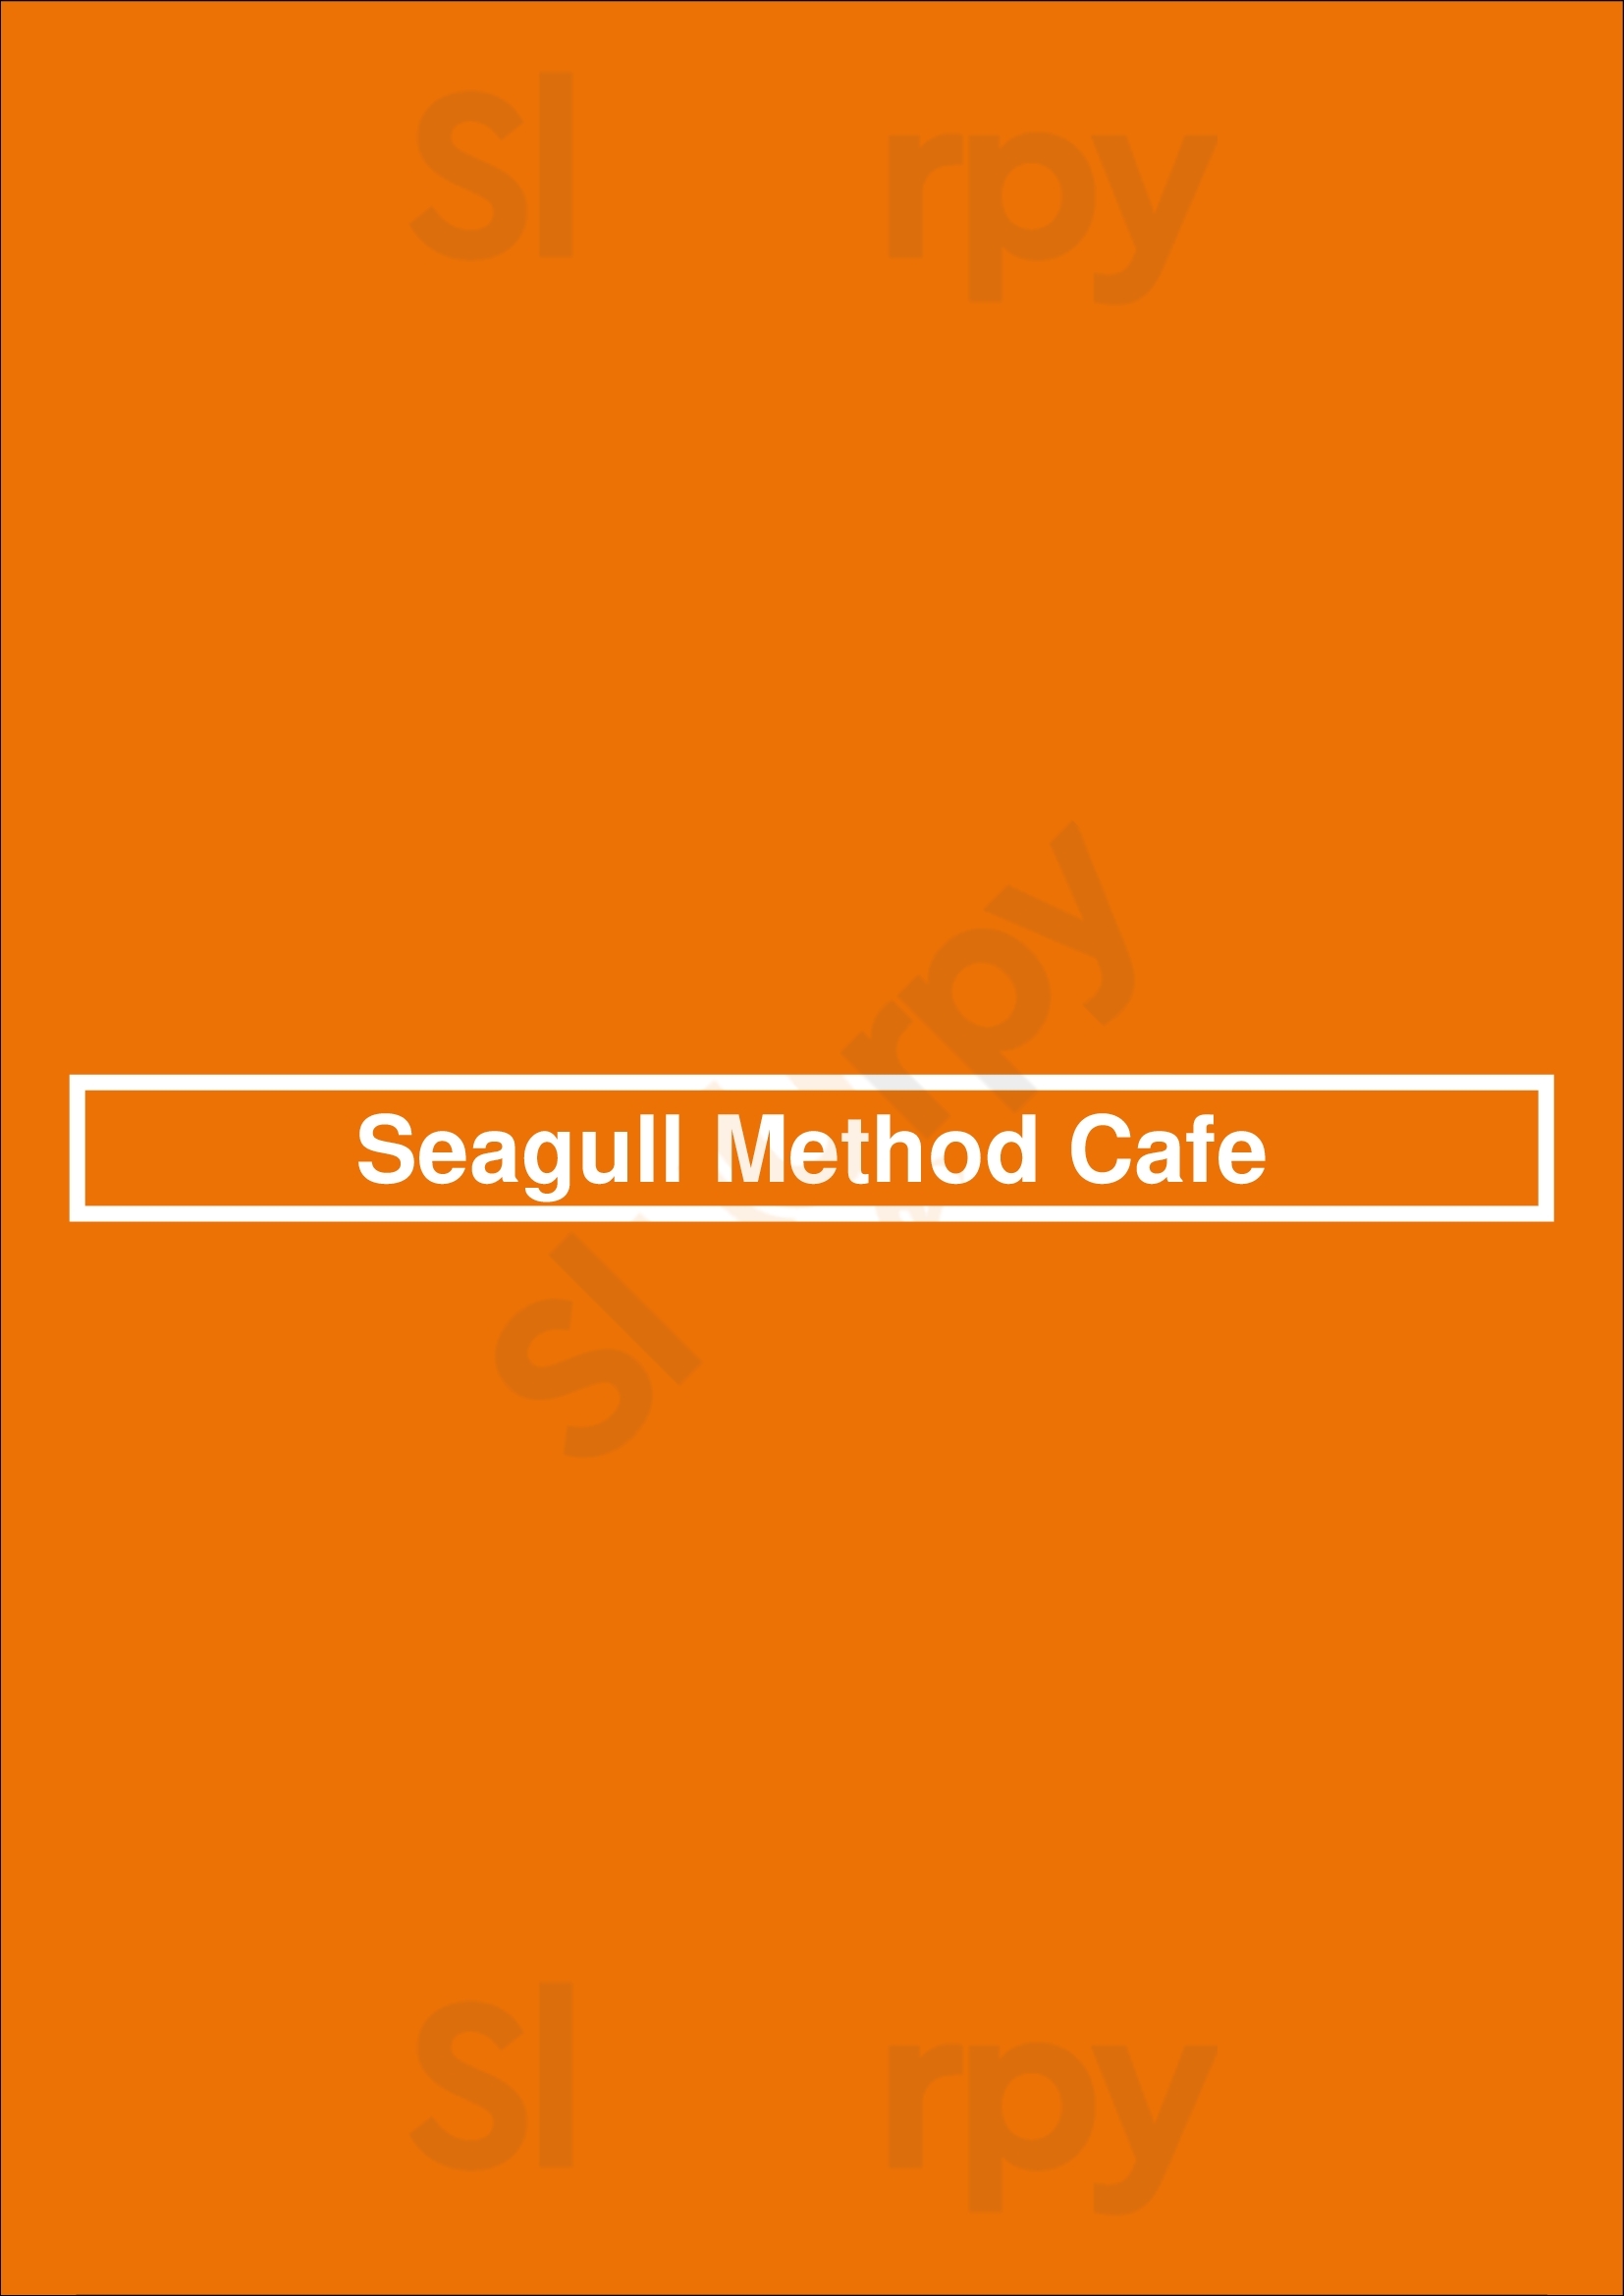 Seagull Method Cafe Lisboa Menu - 1